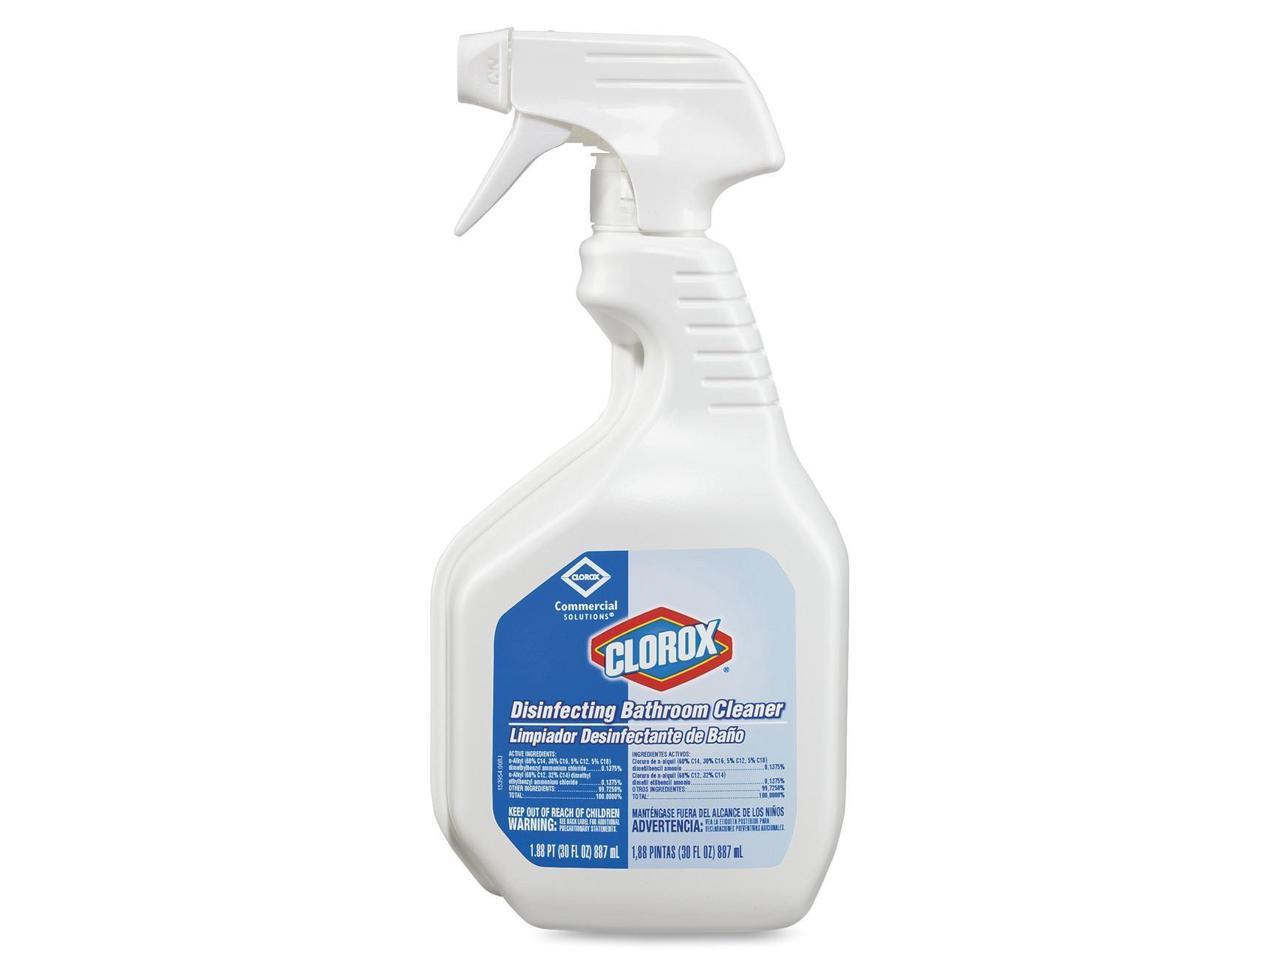 Clorox CLO 00636 Disinfecting Bathroom Cleaner Trigger